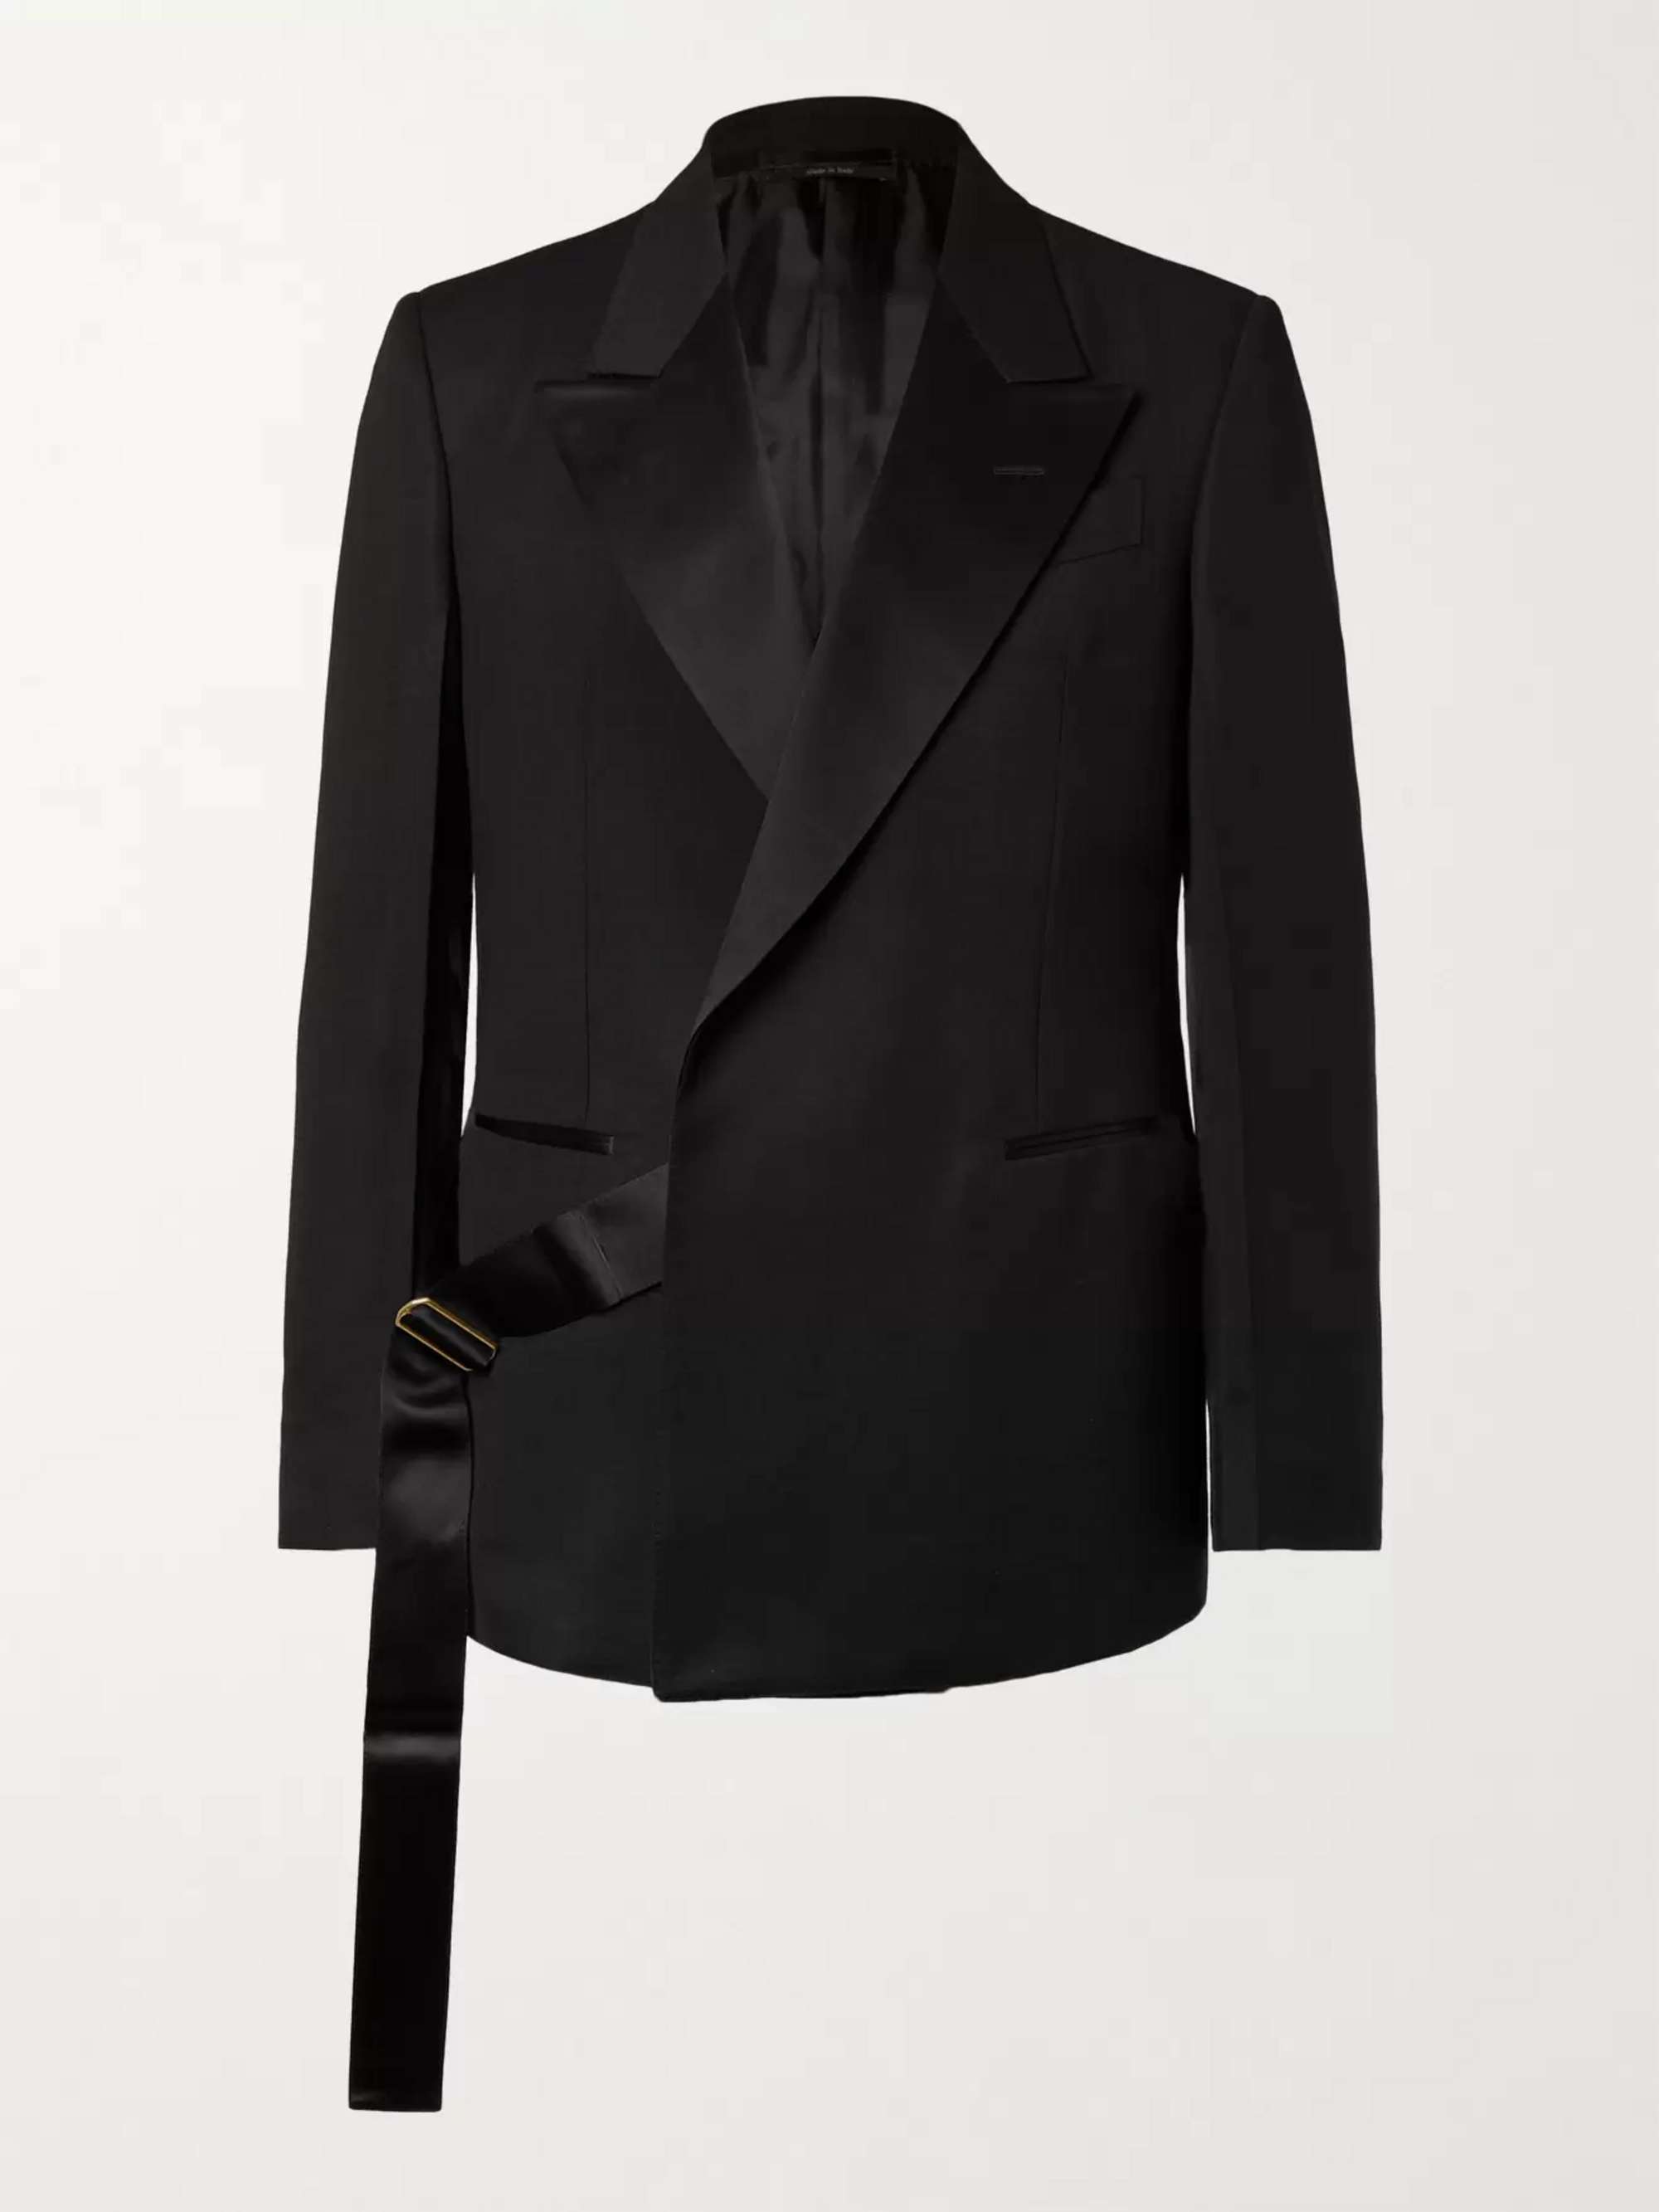 DUNHILL Satin-Trimmed Wool Tuxedo Jacket